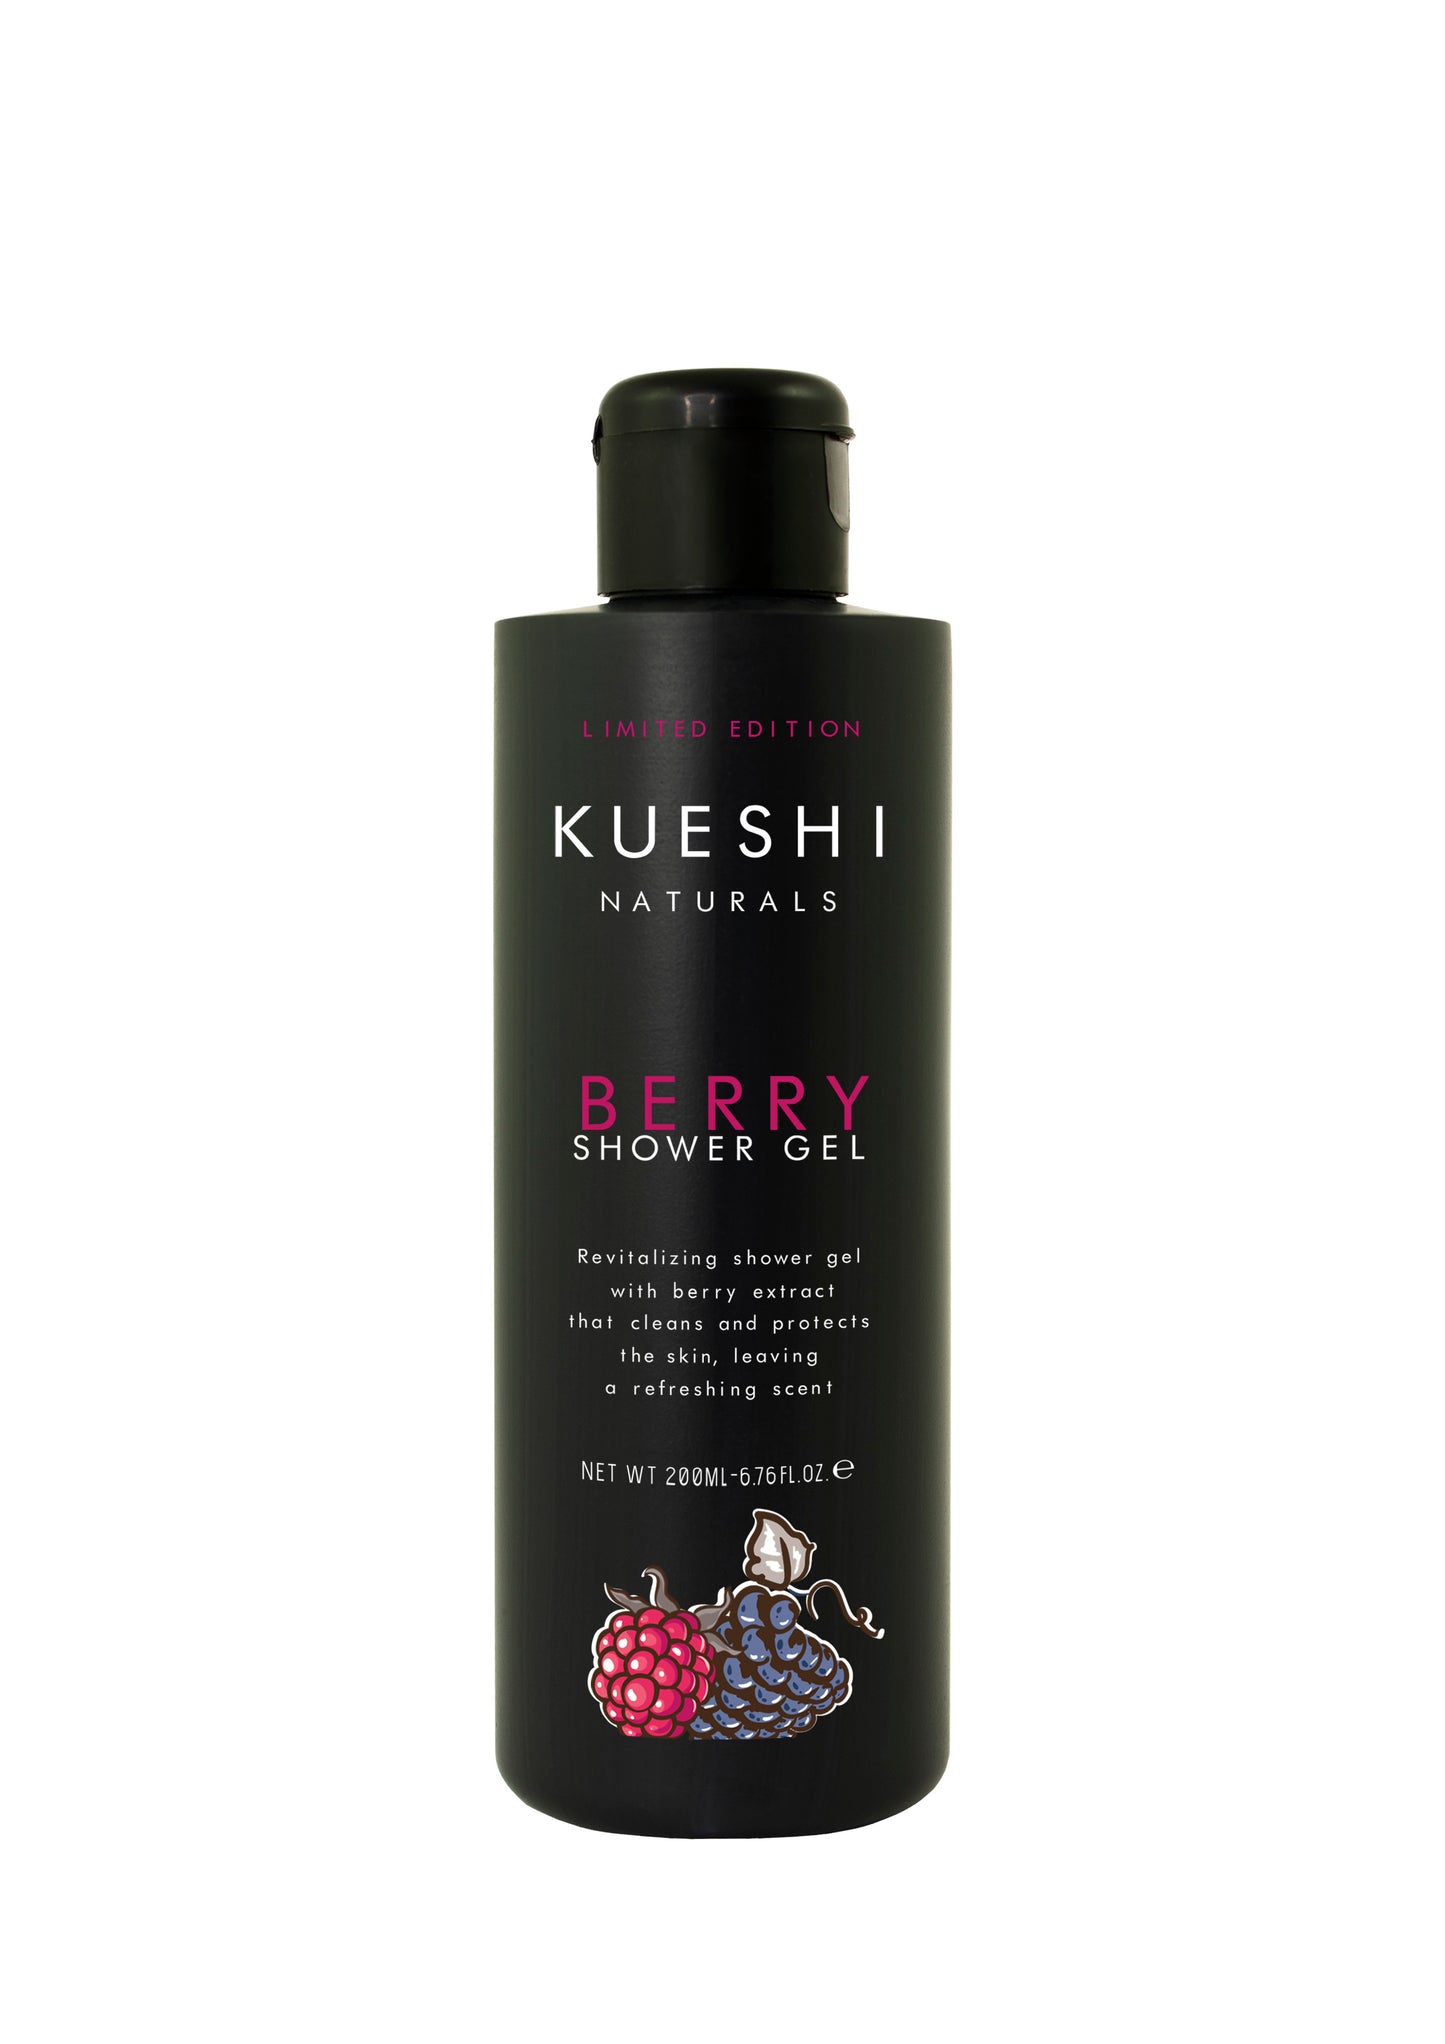 Kueshi Berry Shower Gel